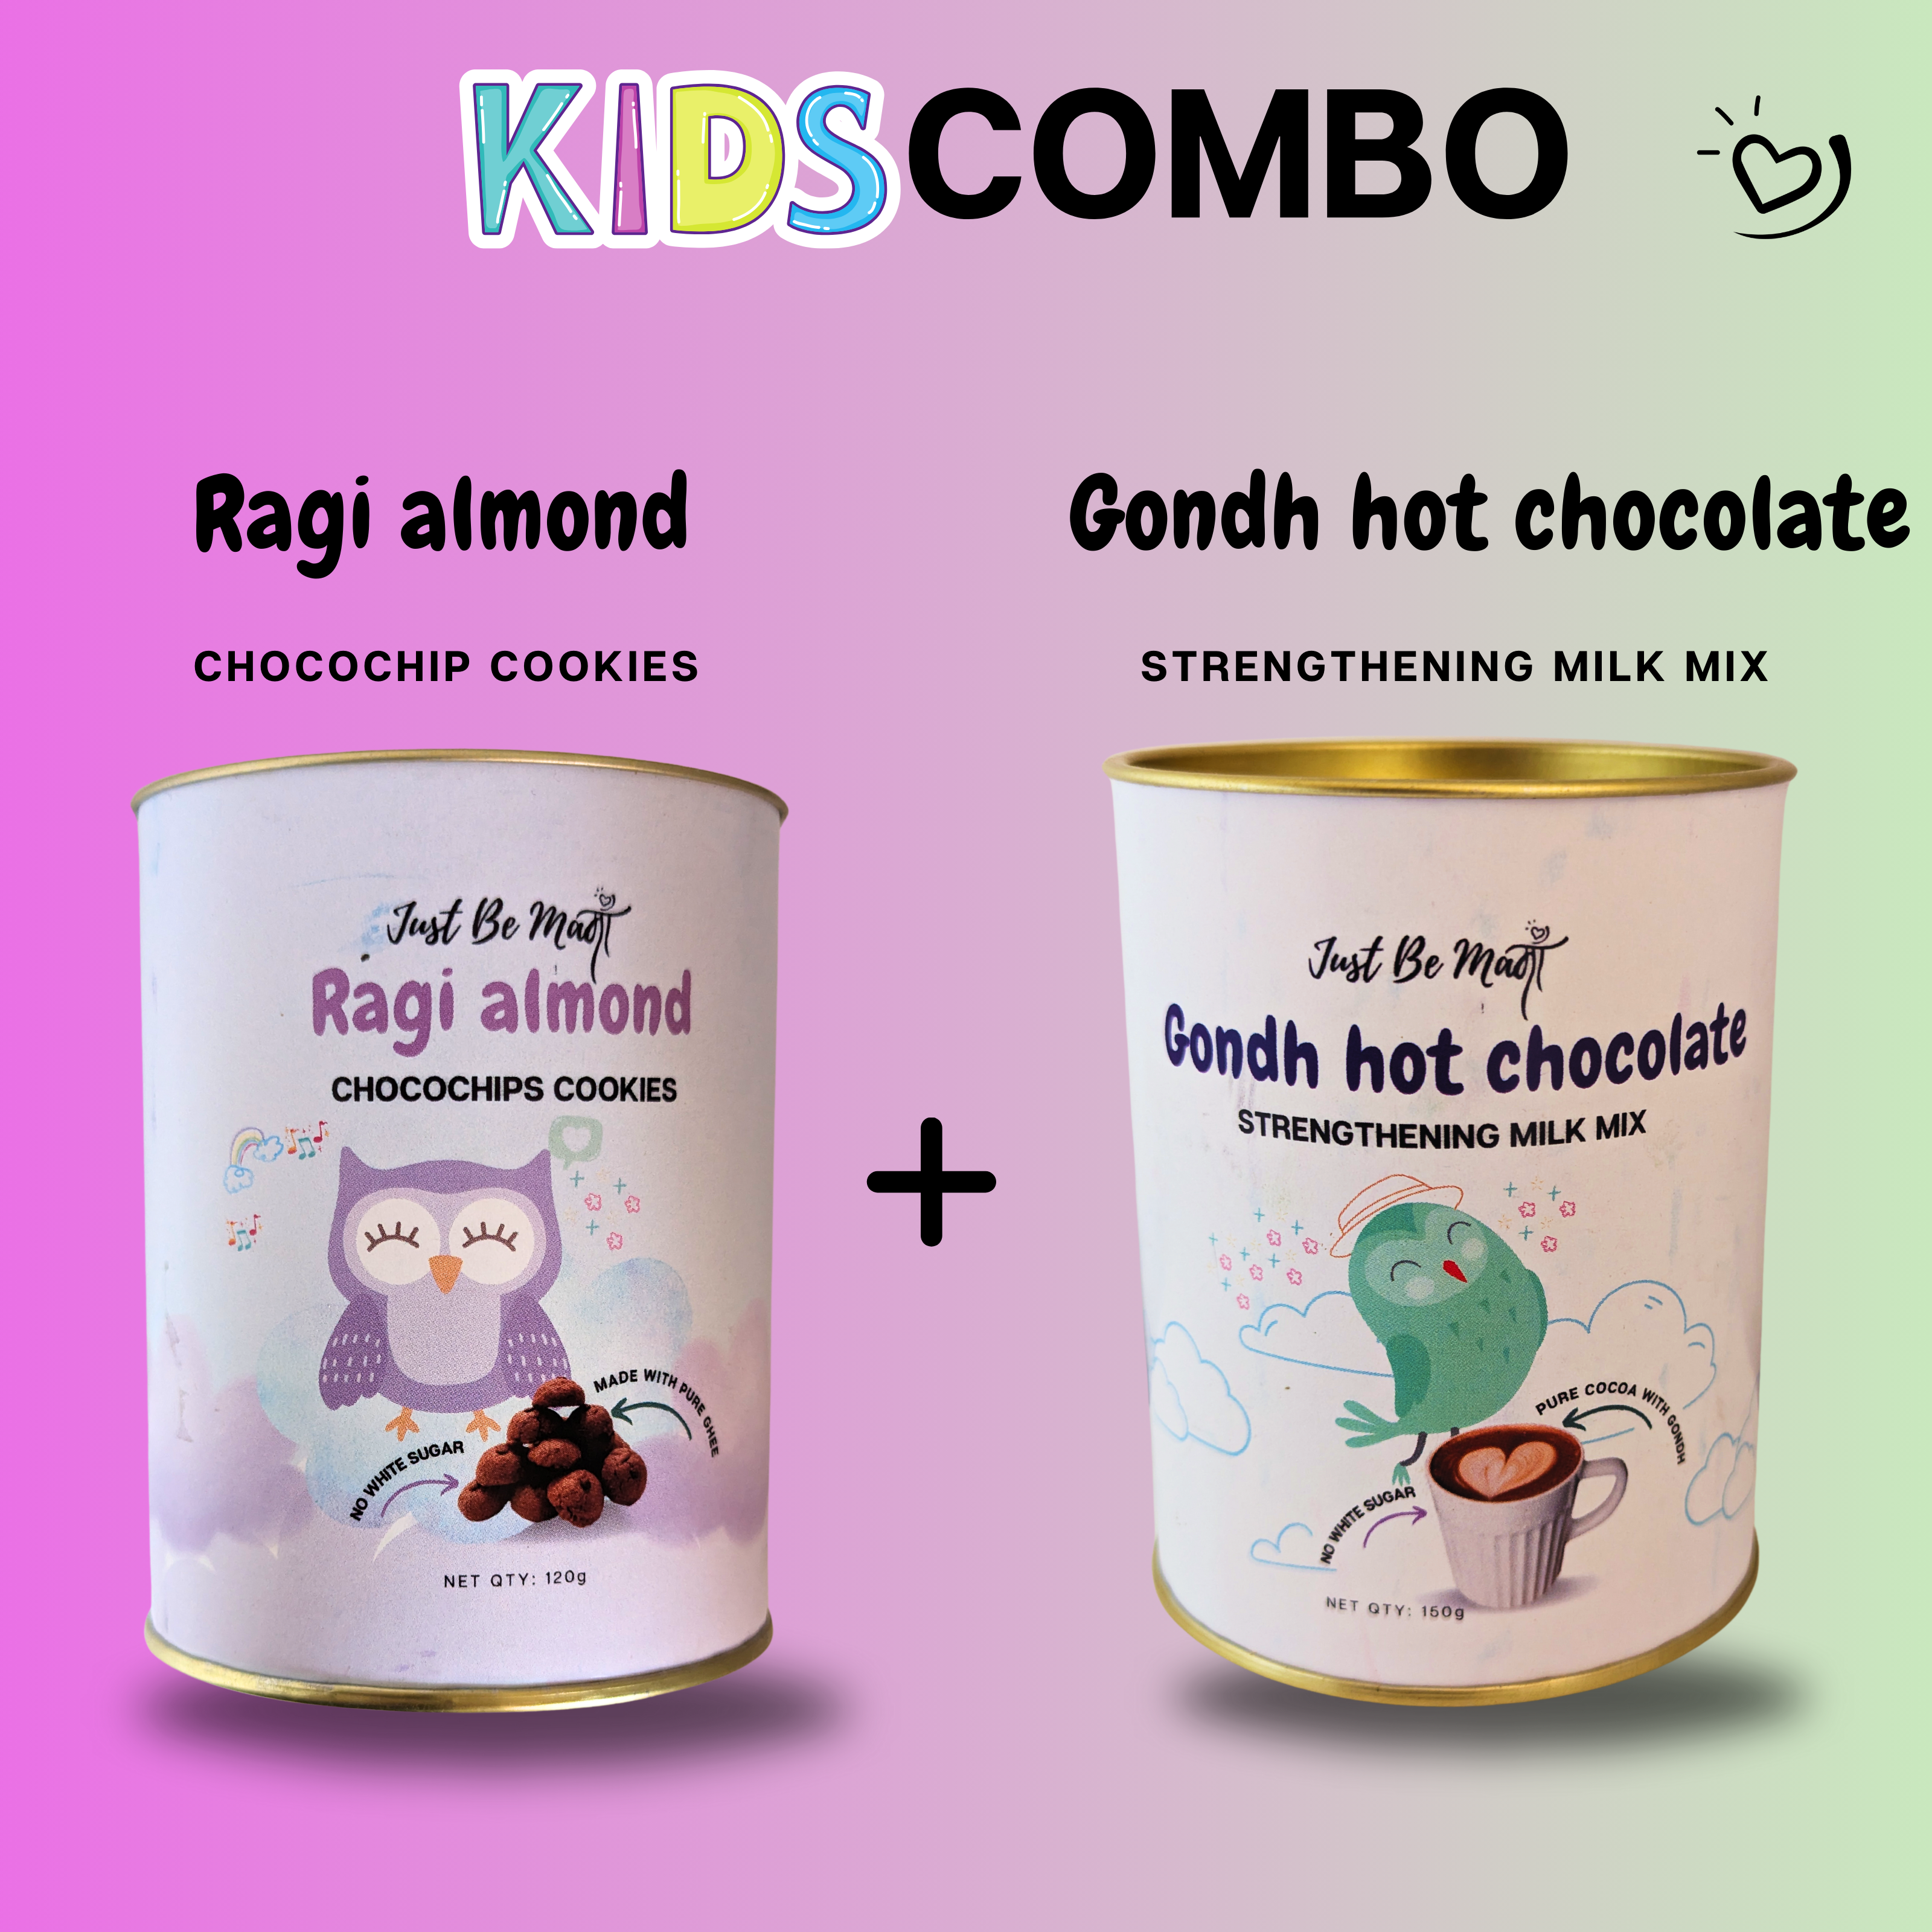 Kids Combo Offer -2 Ragi Almond Cookies + 1 Gondh Hot Chocolate